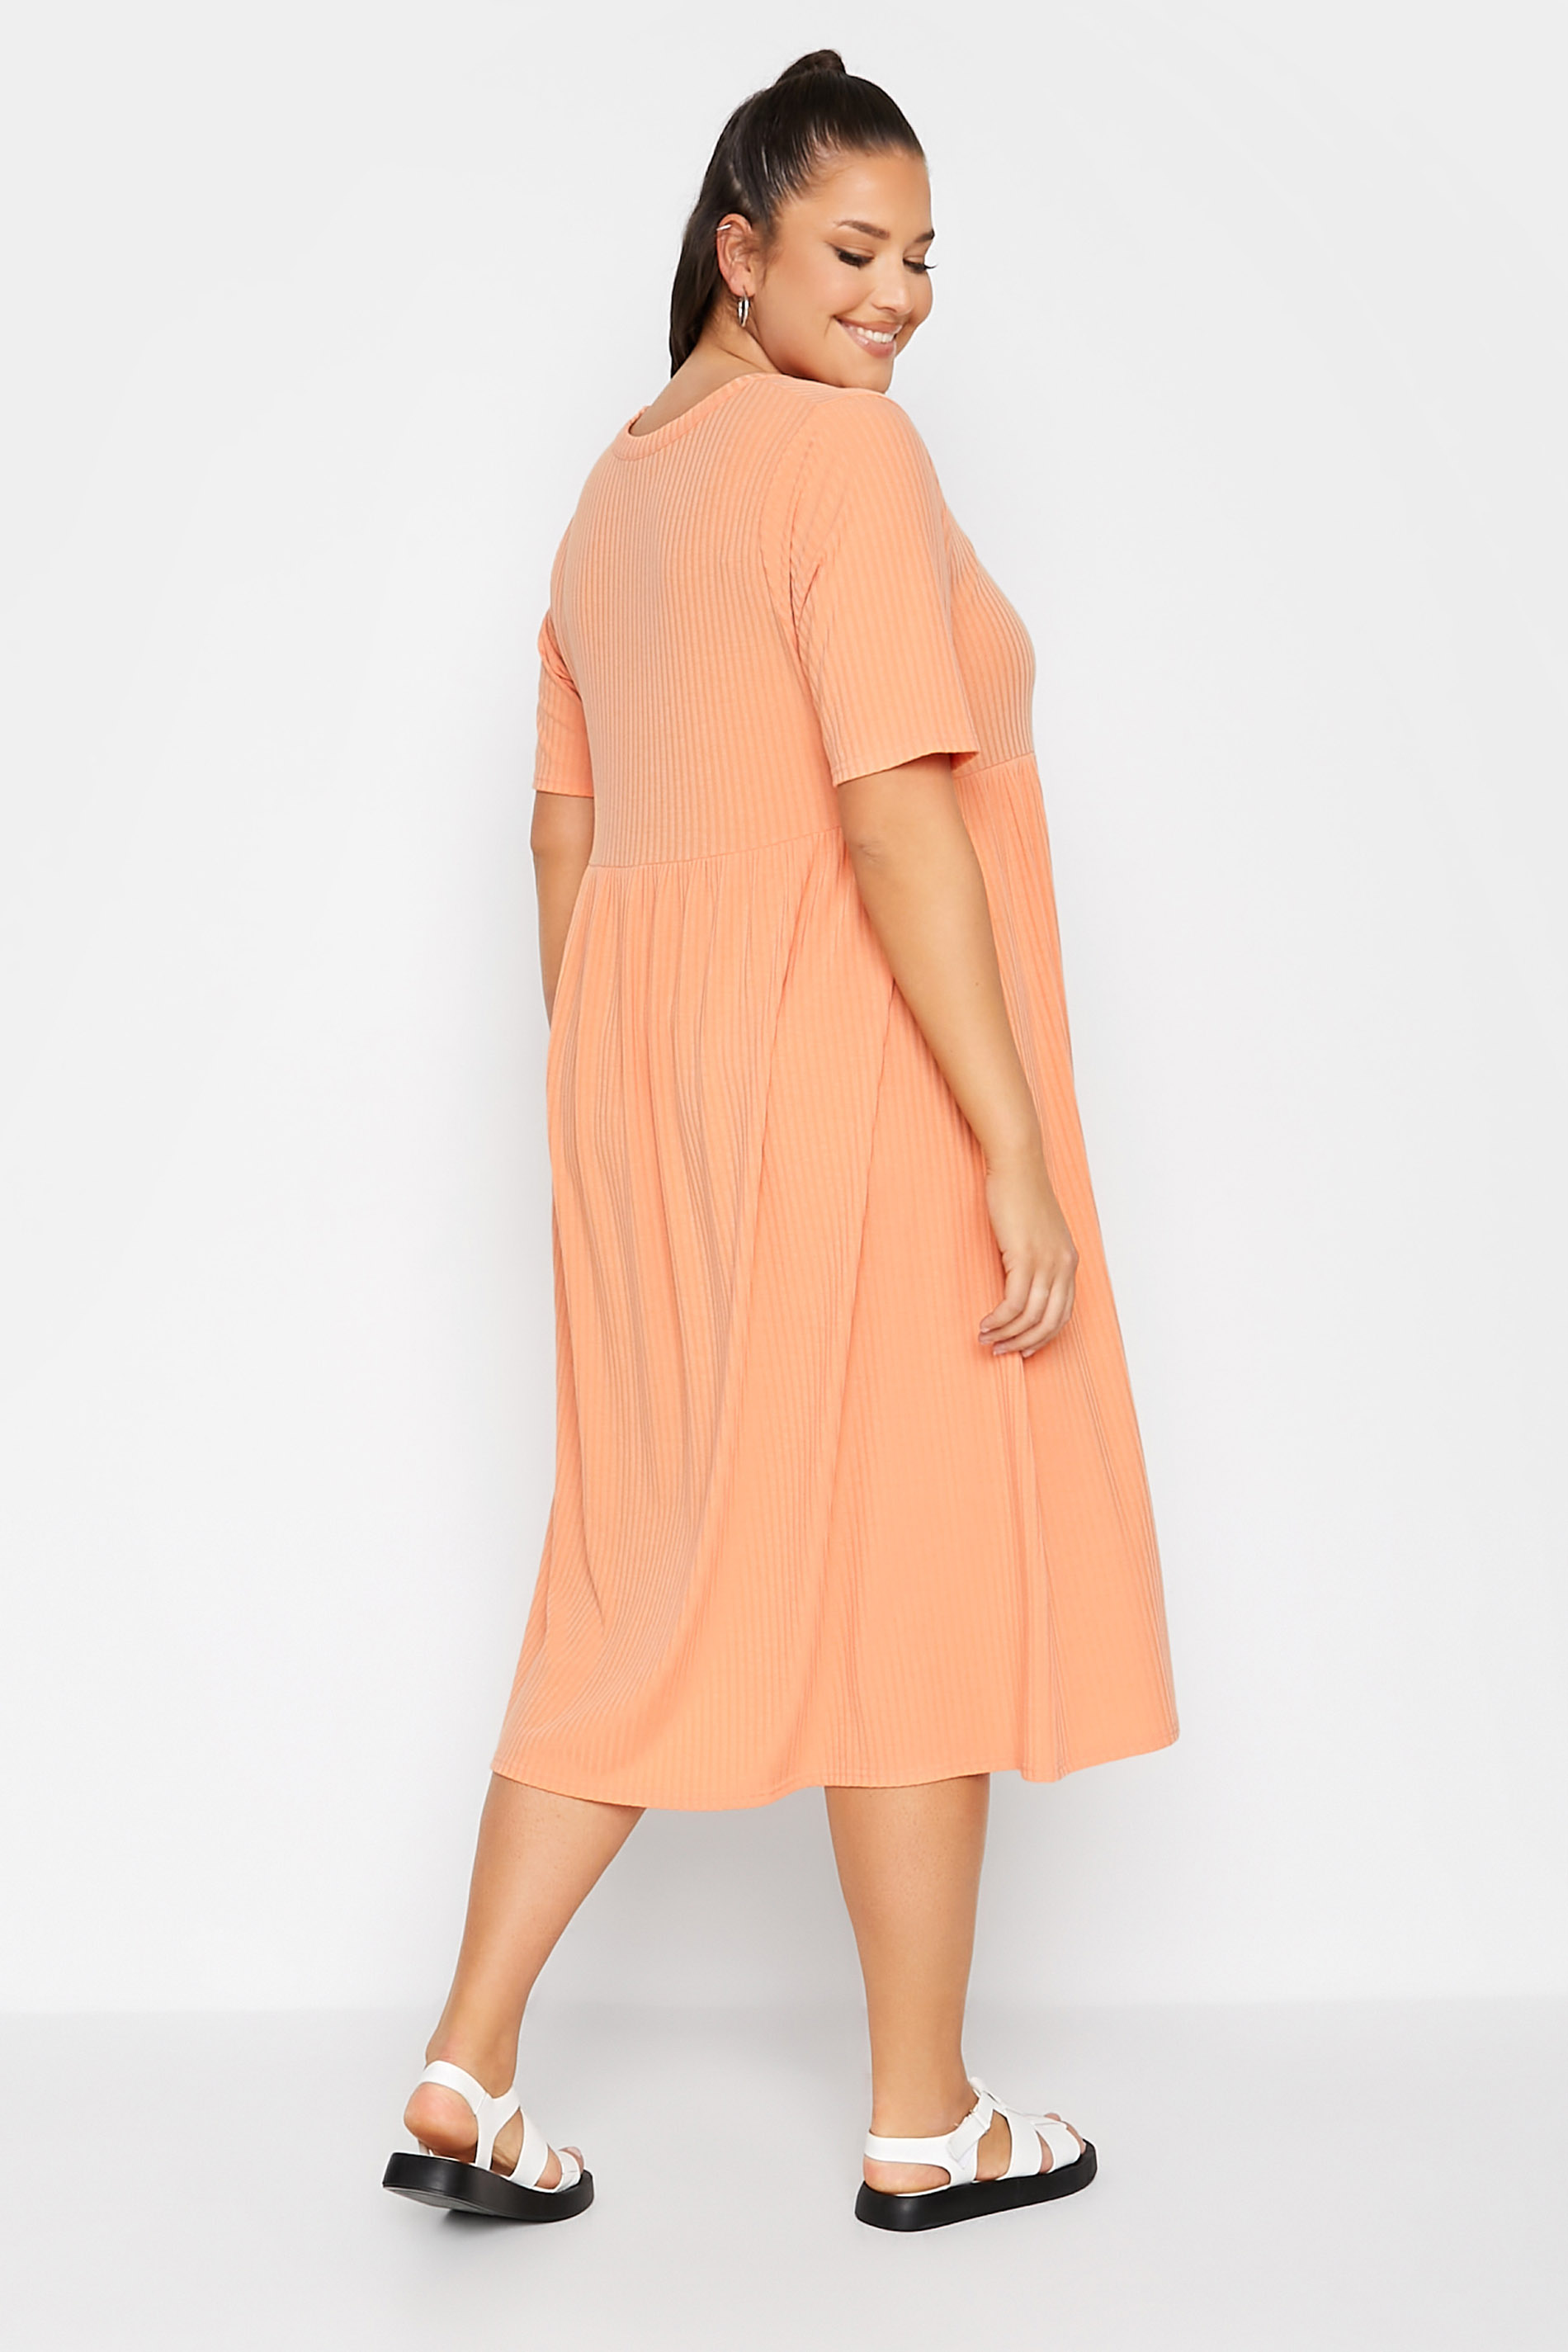 LIMITED COLLECTION Plus Size Light Orange Ribbed Peplum Midi Dress | Yours Clothing  3